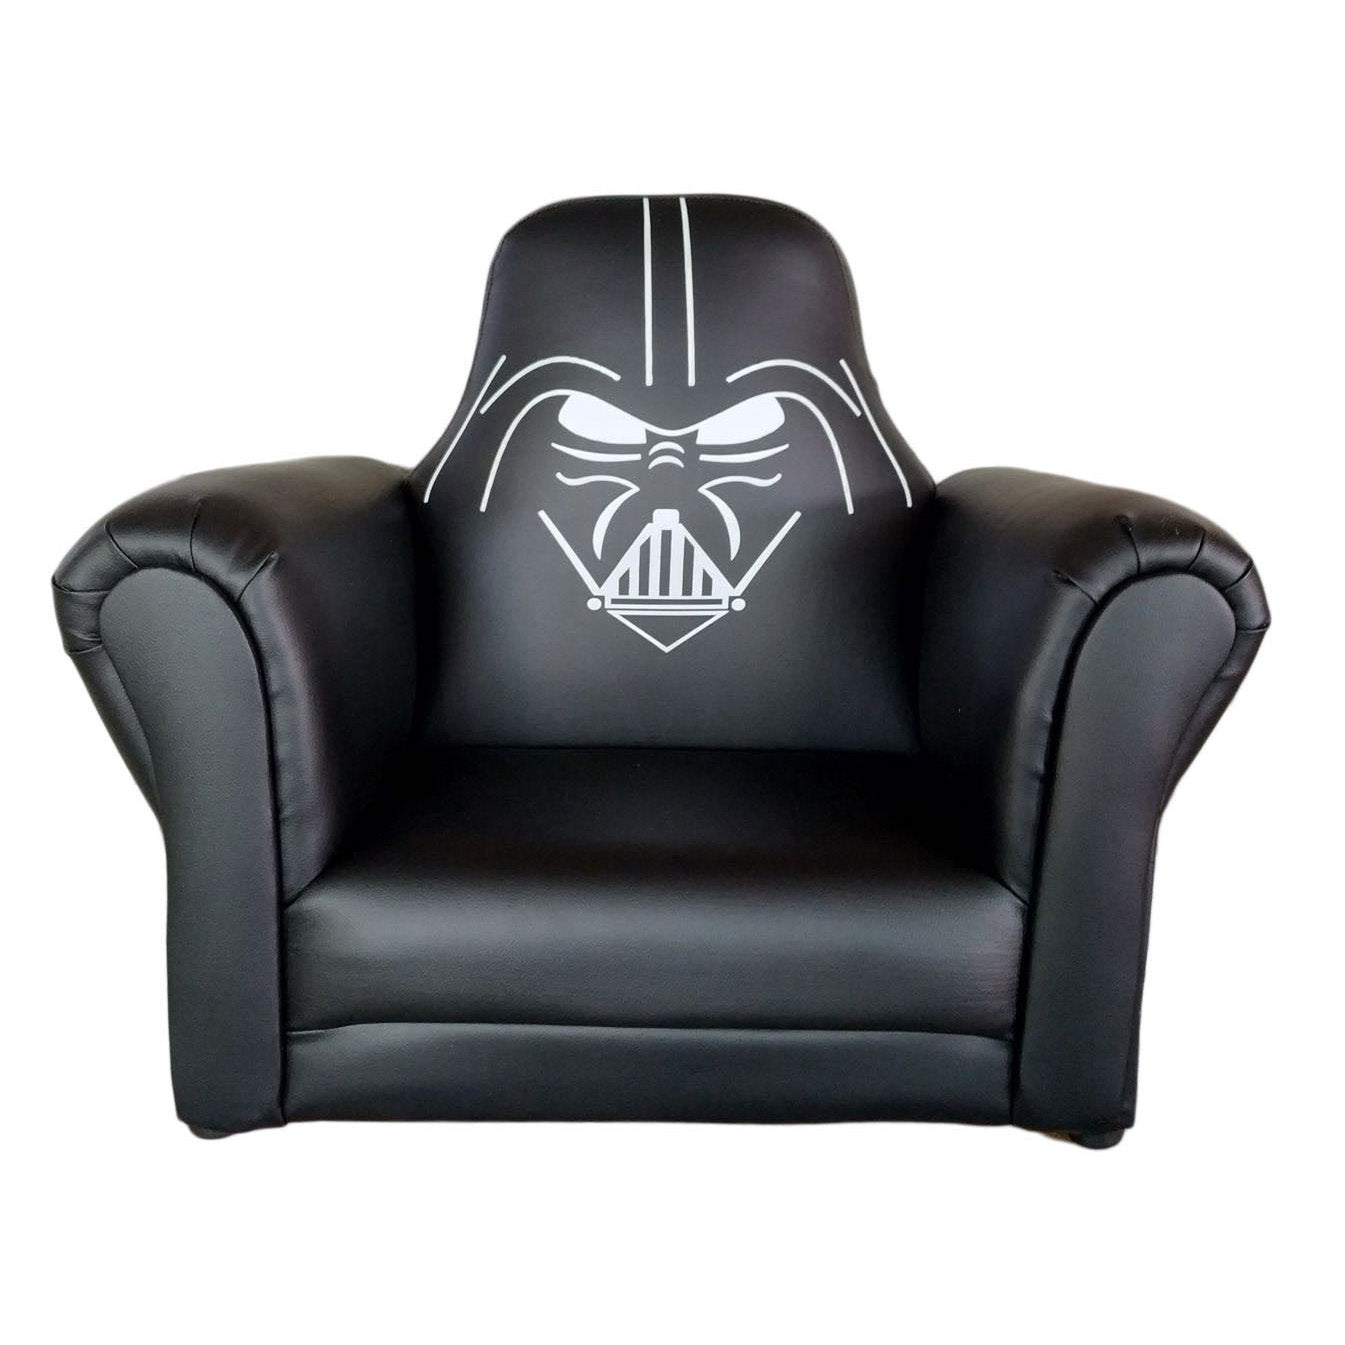 Darth Vader Arm Chair